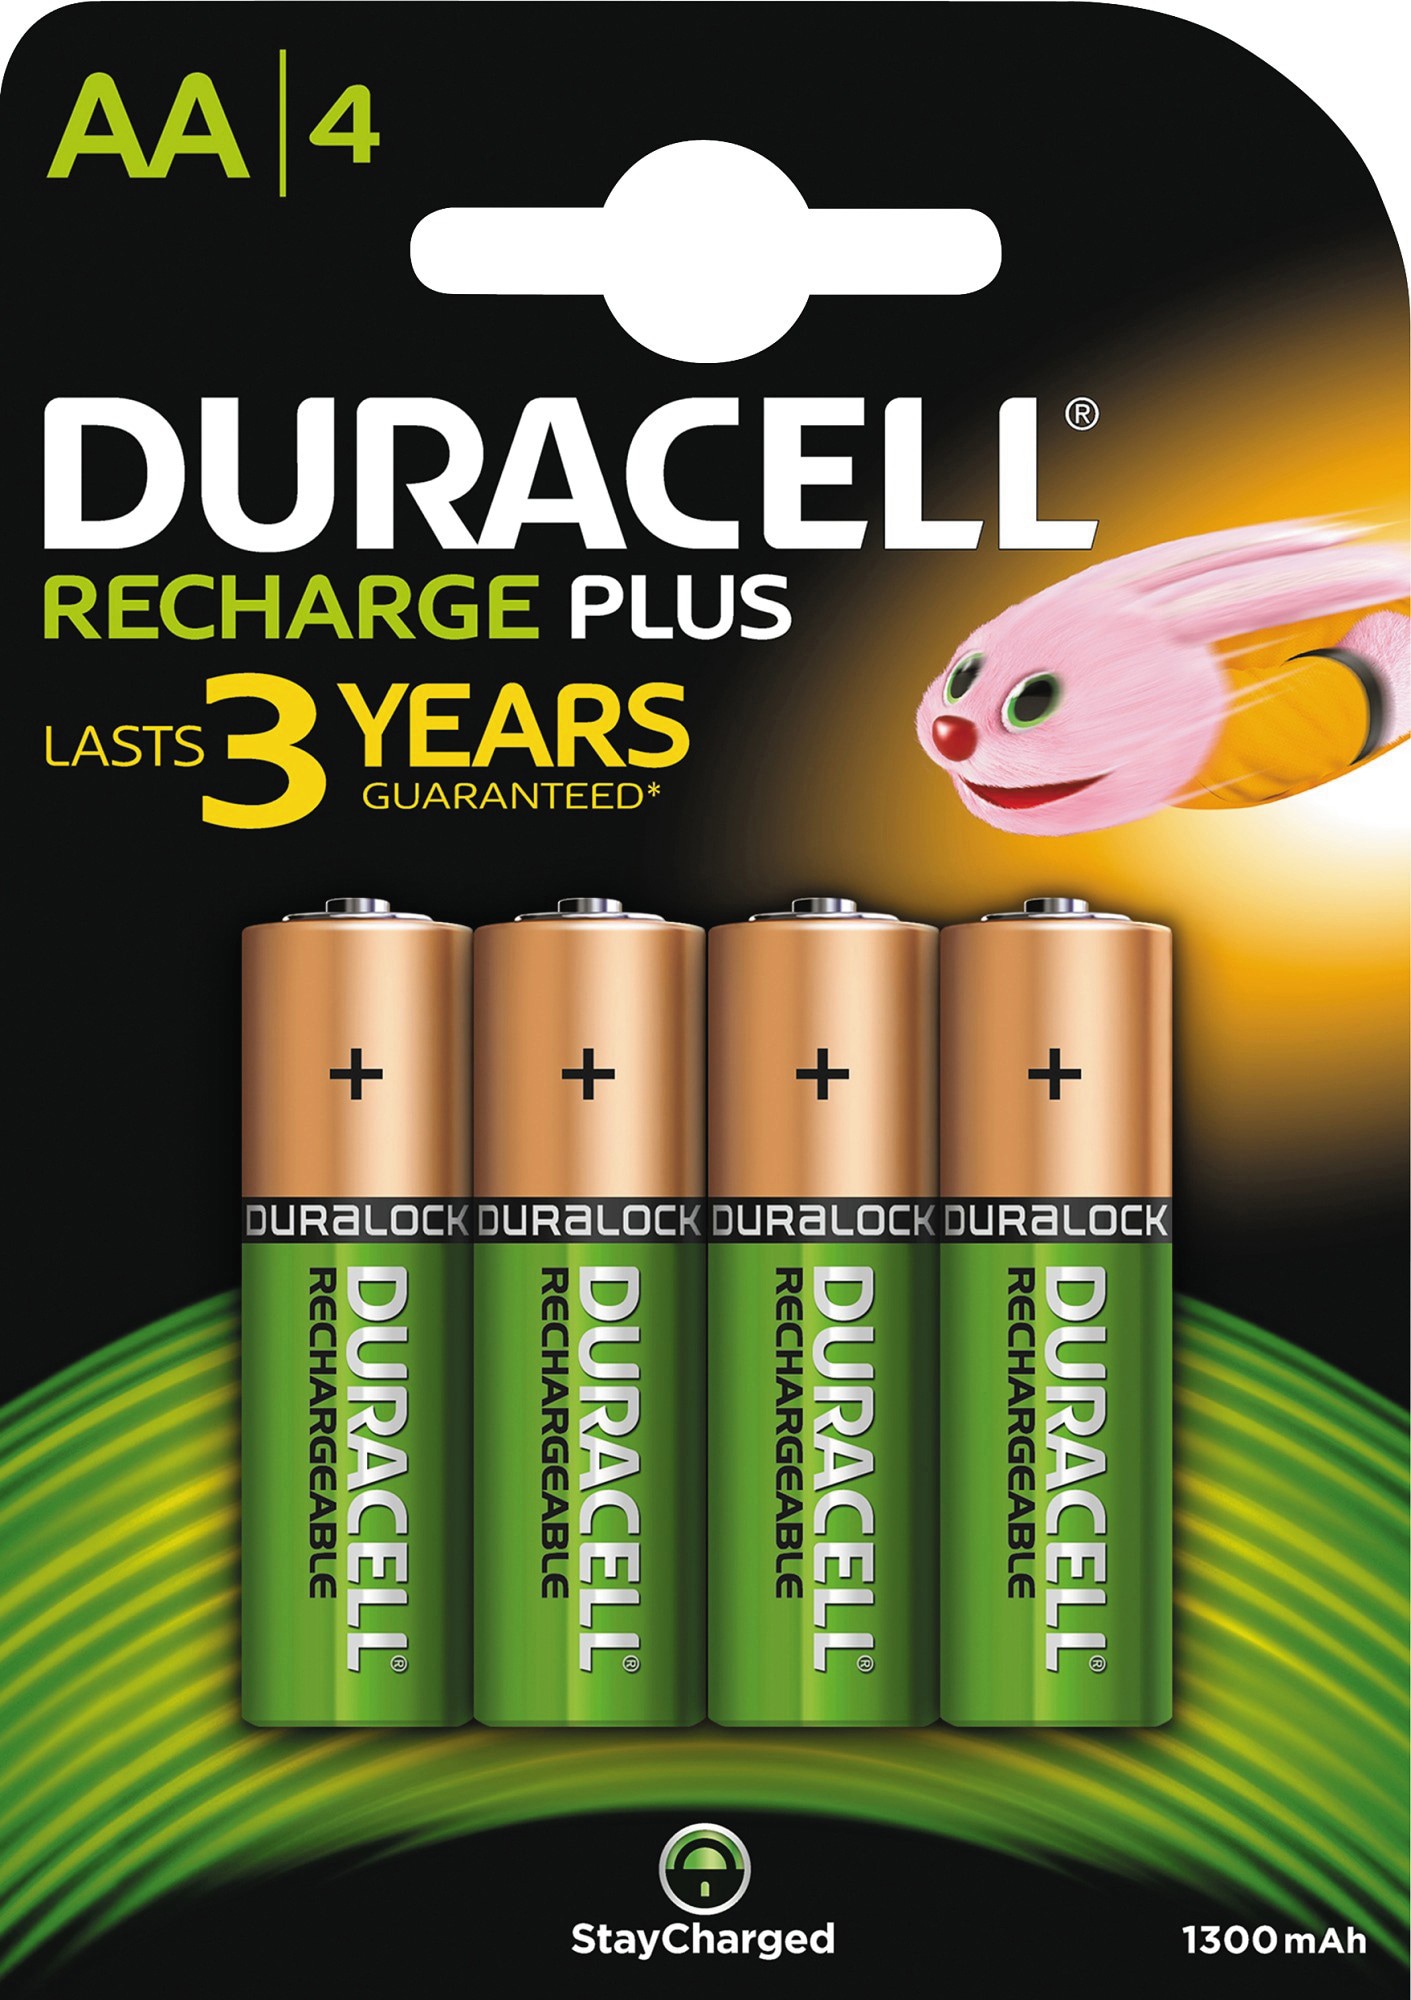 Duracell Recharge Plus AA 1300mAh batteri - 4 stk | Elgiganten